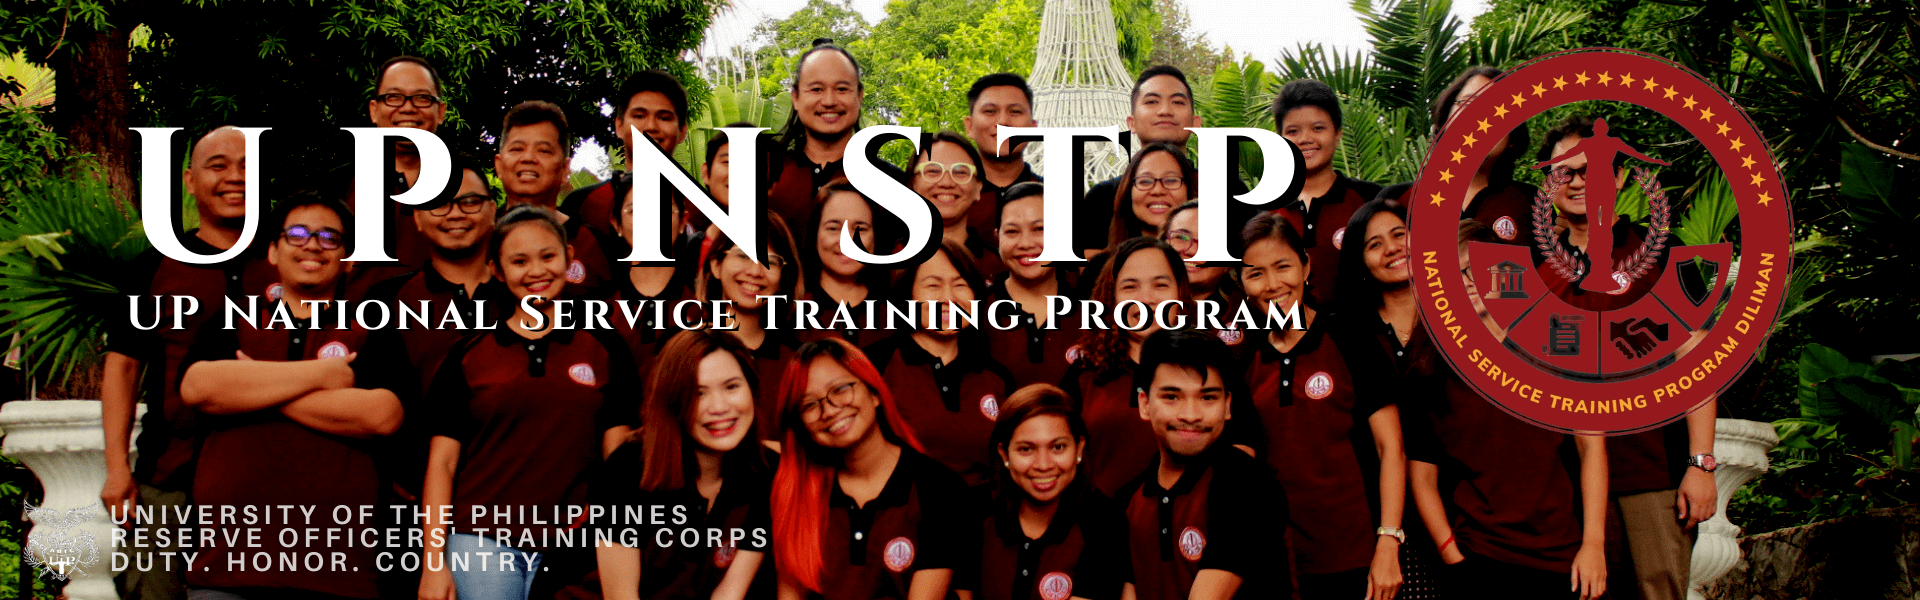 The National Service Training Program